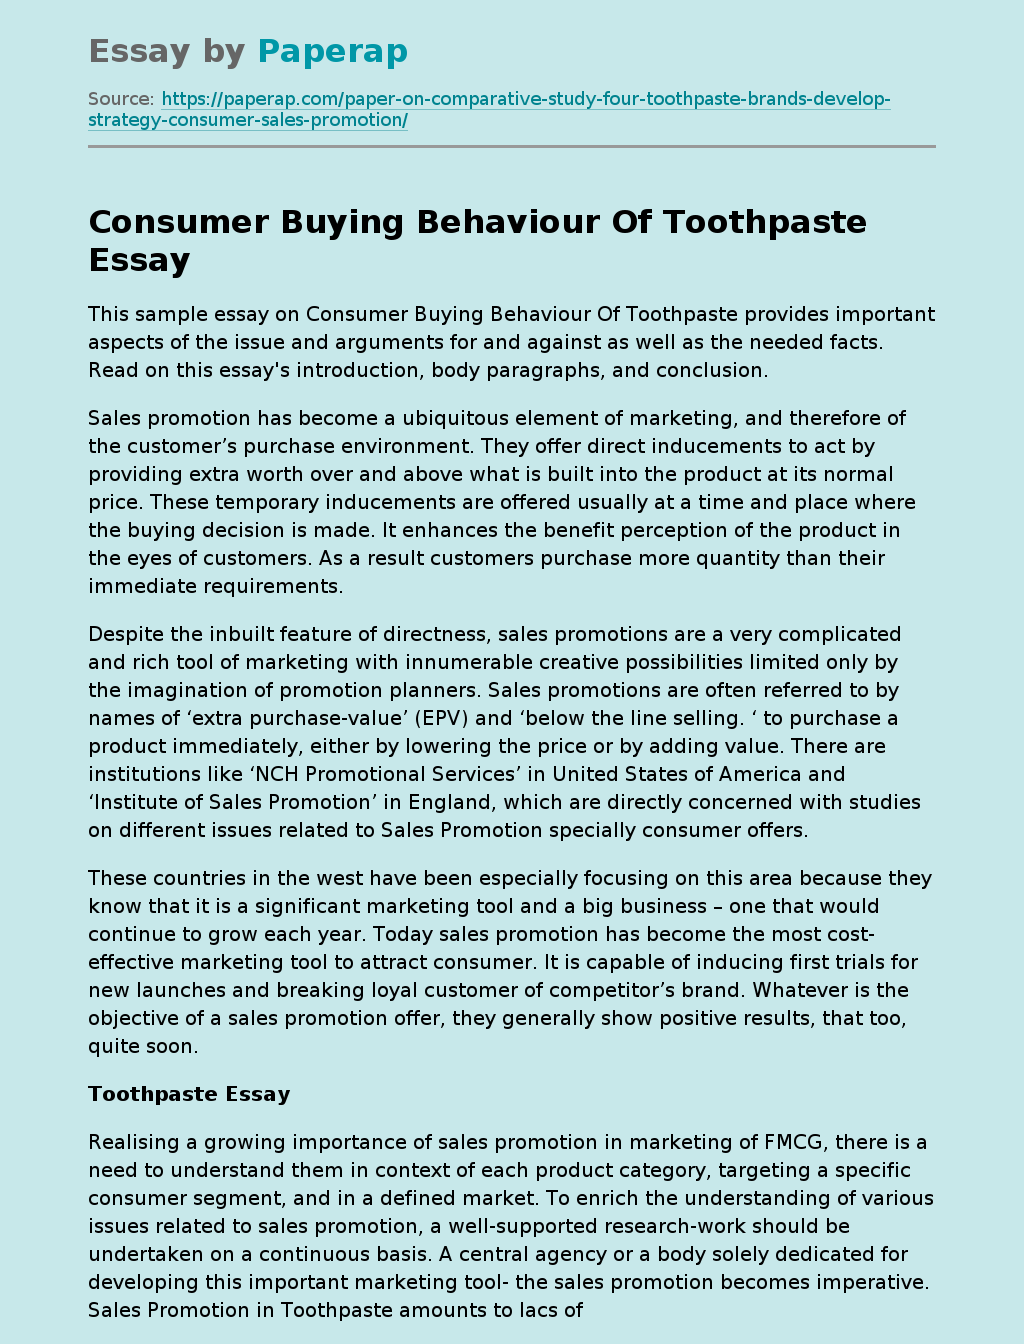 Consumer Buying Behaviour: Toothpaste